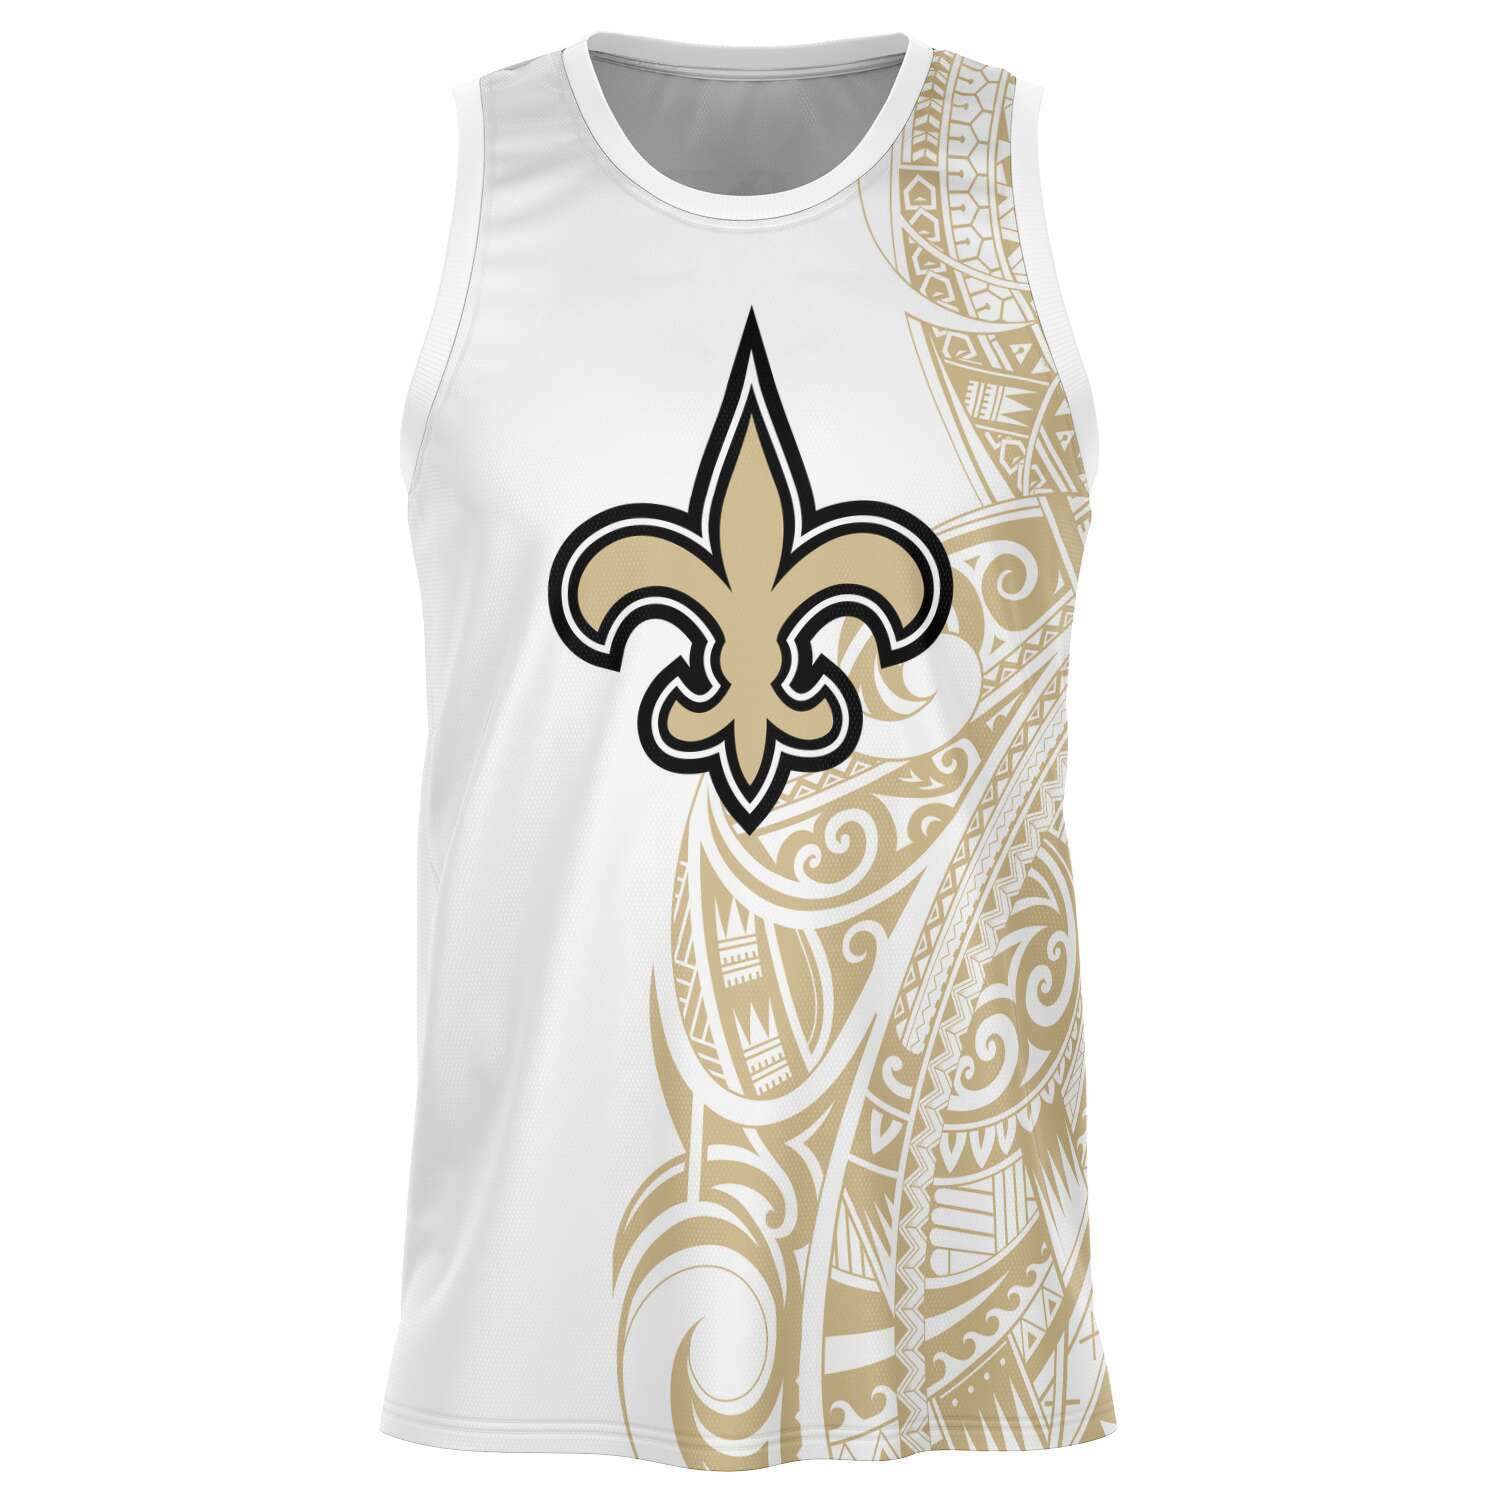 New Orleans Saints Basketball Jersey - ShopperBoard